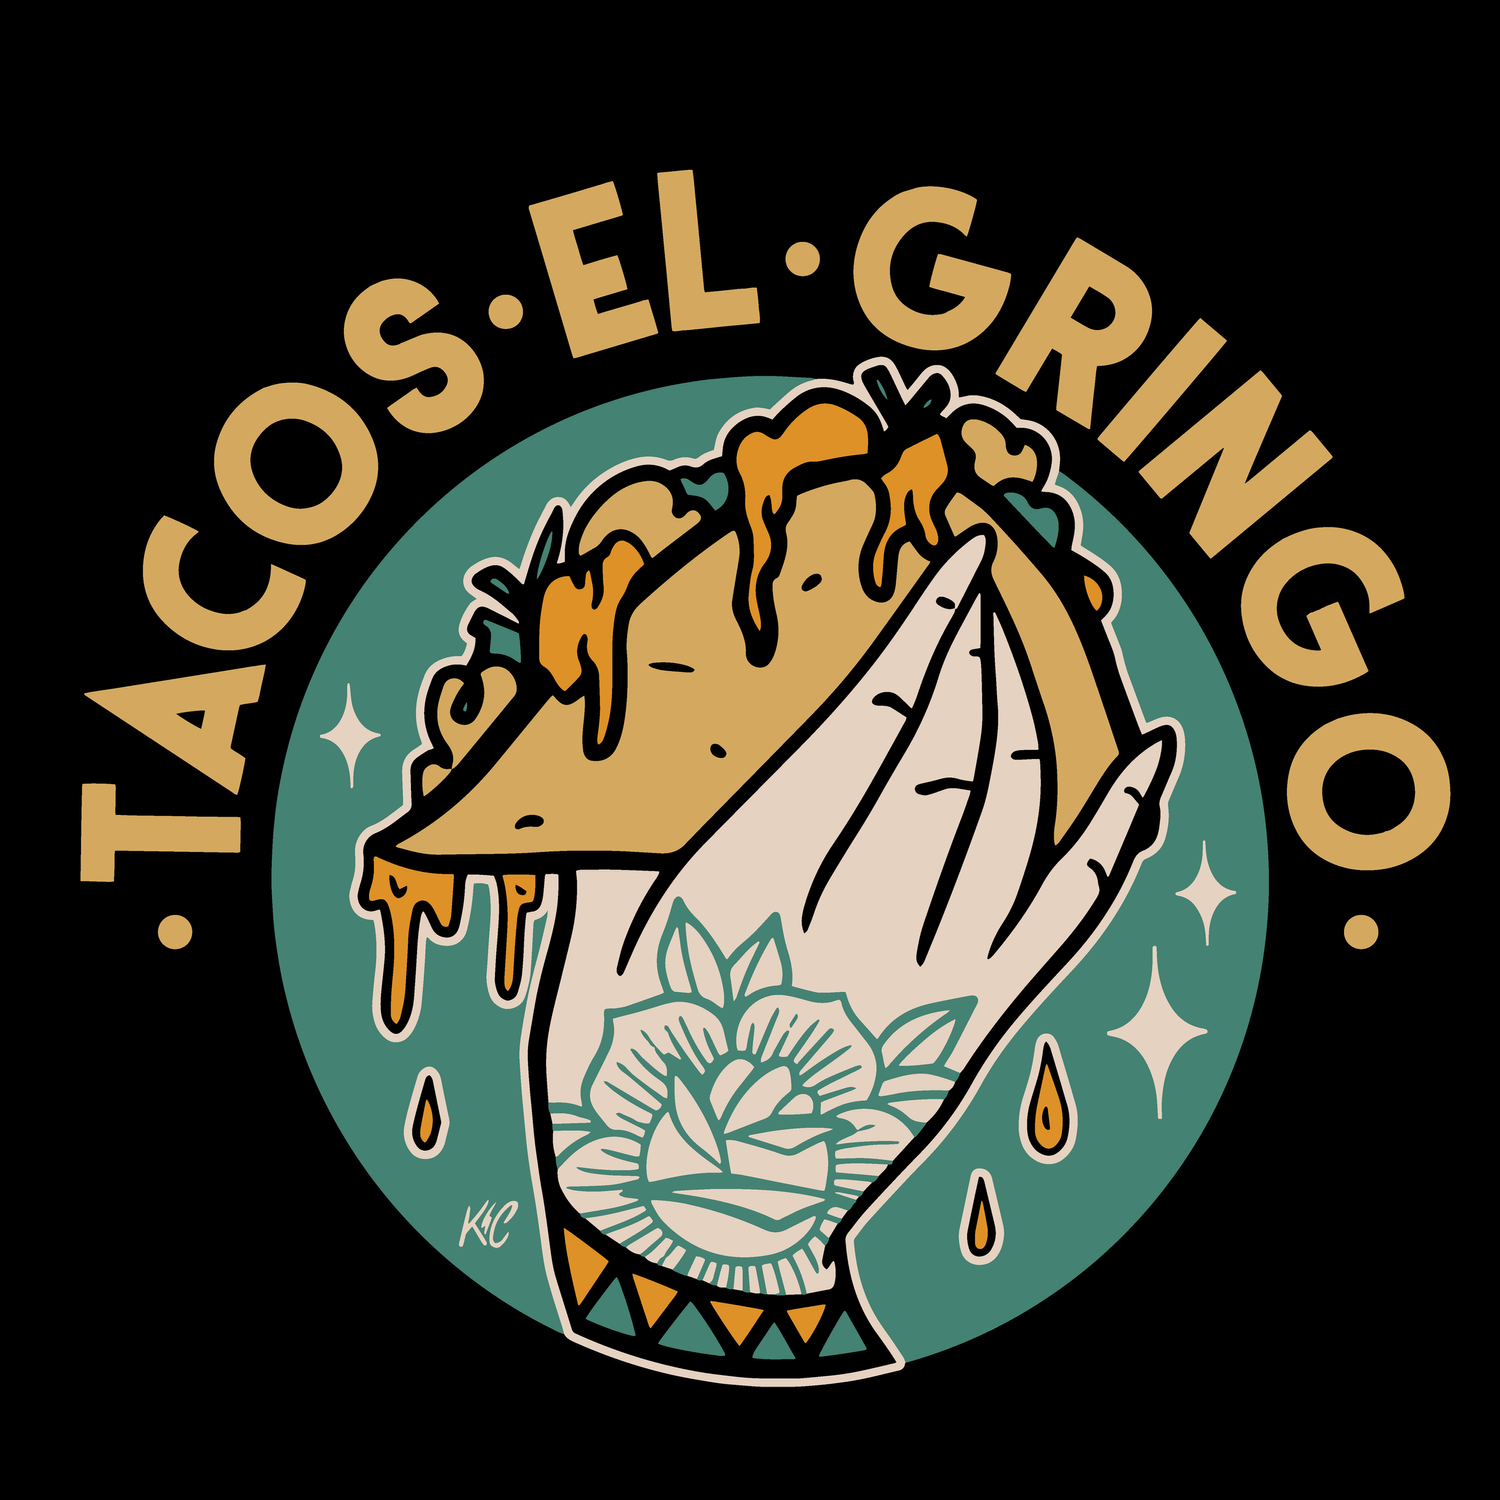 tacos el gringo- tacos